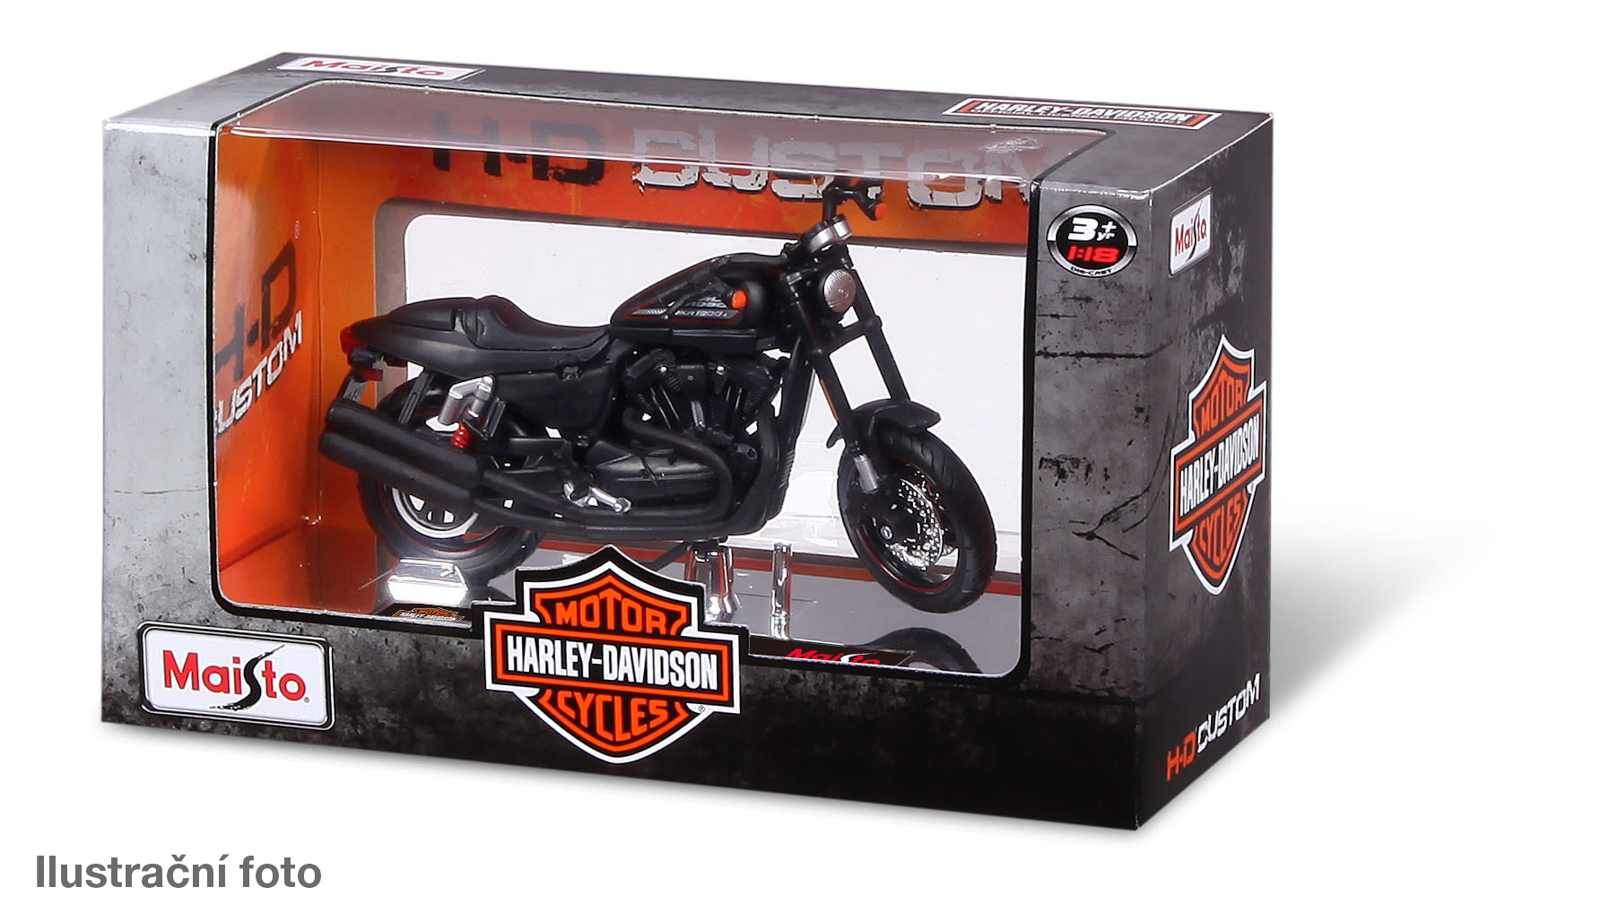 Maisto - HD - Motocykl - Harley-Davidson Motorcycles, assort, window box, 1:18